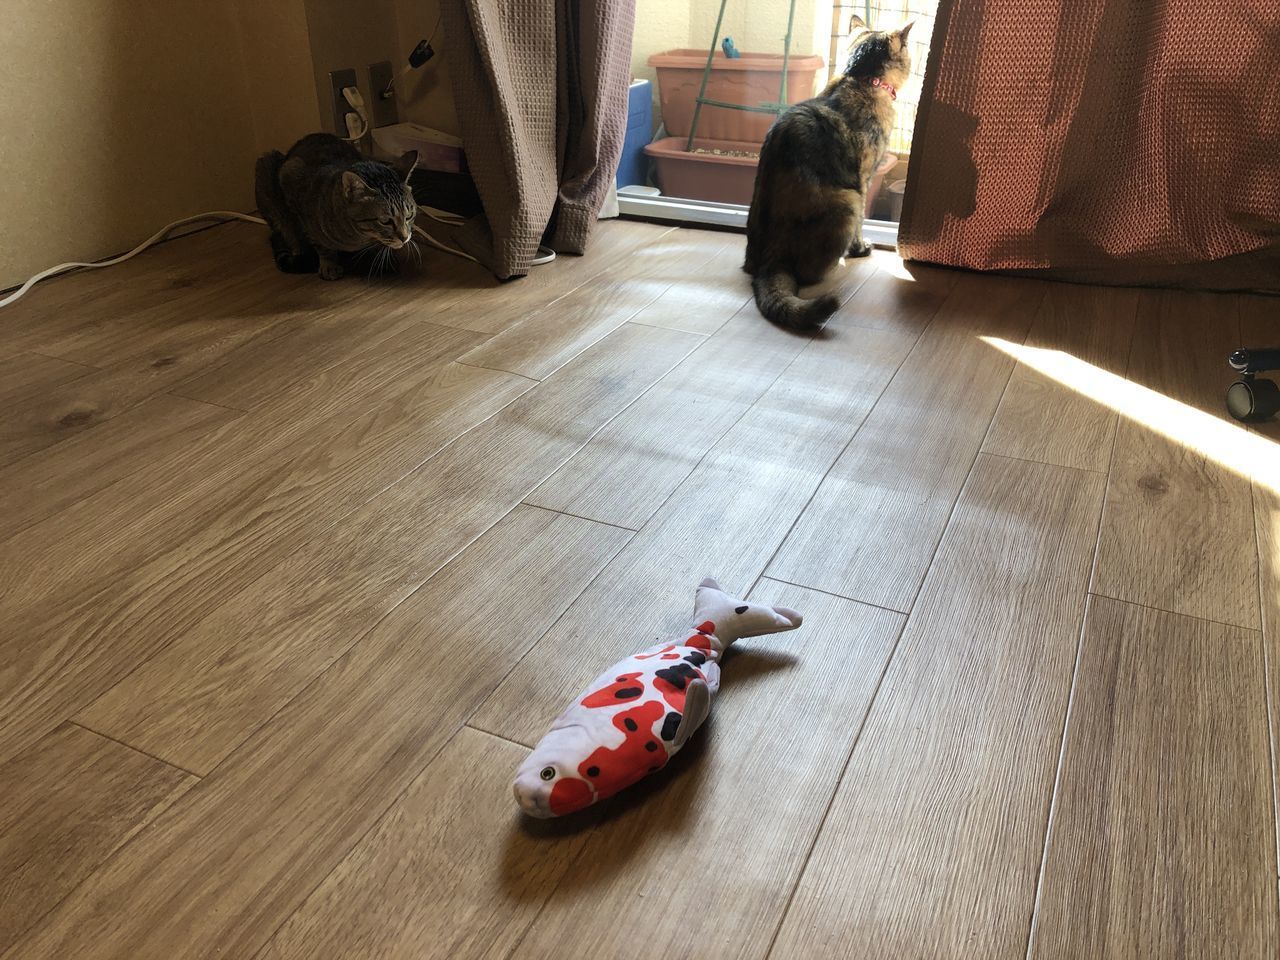 CAT LYING DOWN ON FLOOR